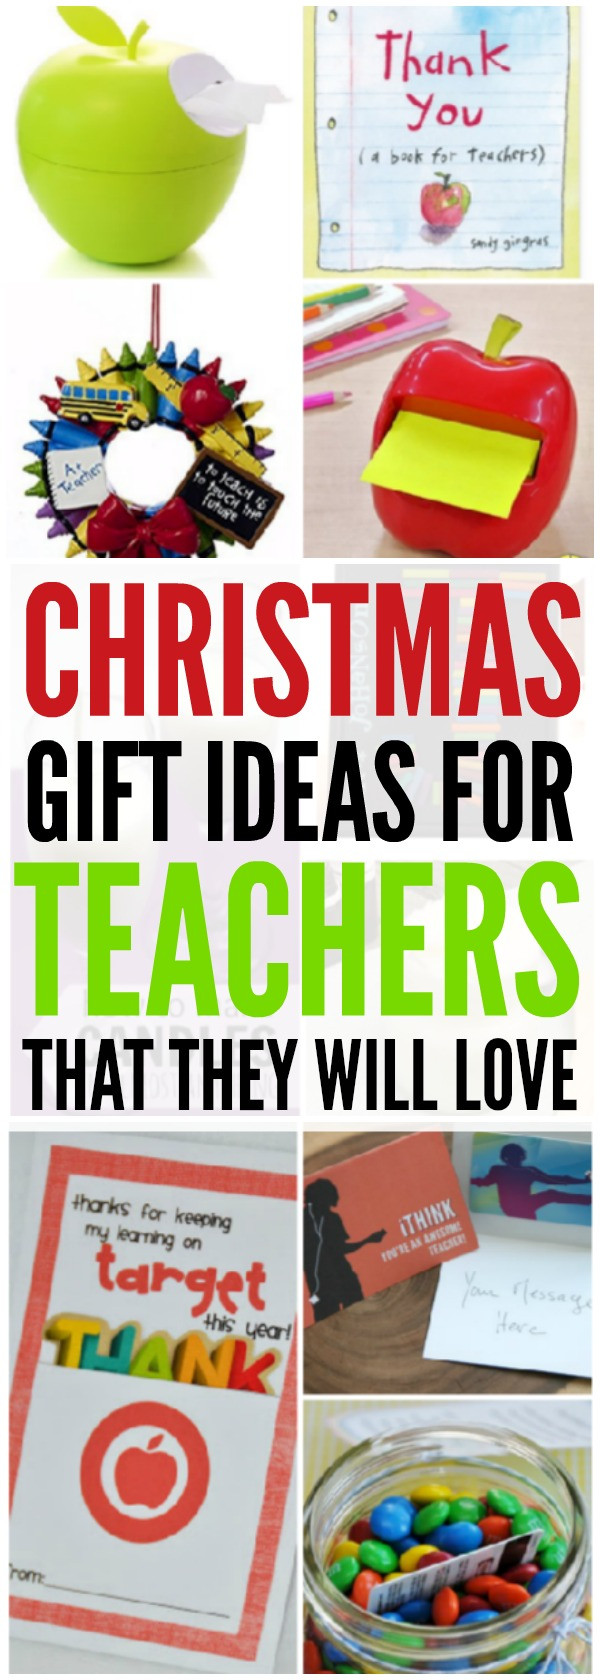 Christmas Gift Ideas For Teachers From Students
 20 Christmas Gift Ideas for Teachers Coupon Closet